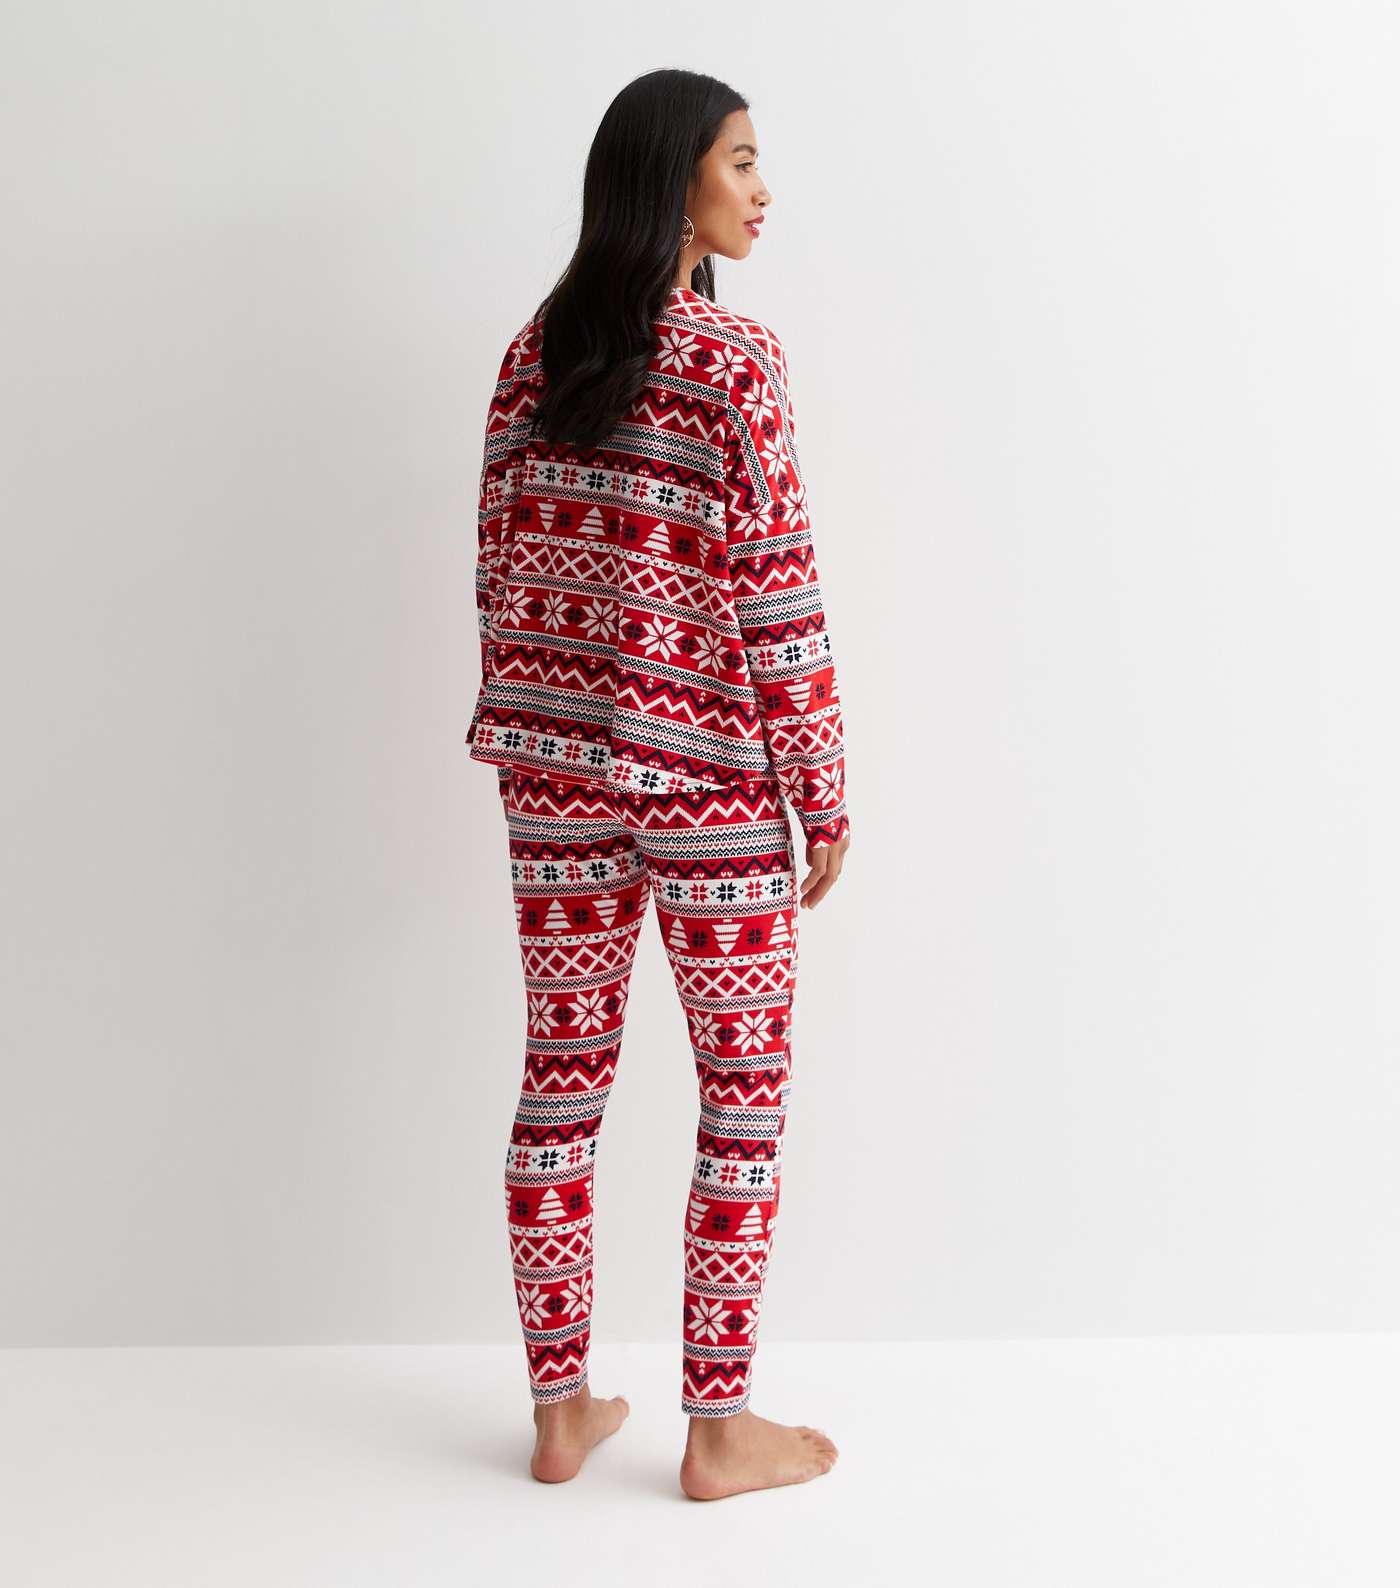 Petite Red Soft Touch Christmas Family Pyjama Set with Fair Isle Print Image 5